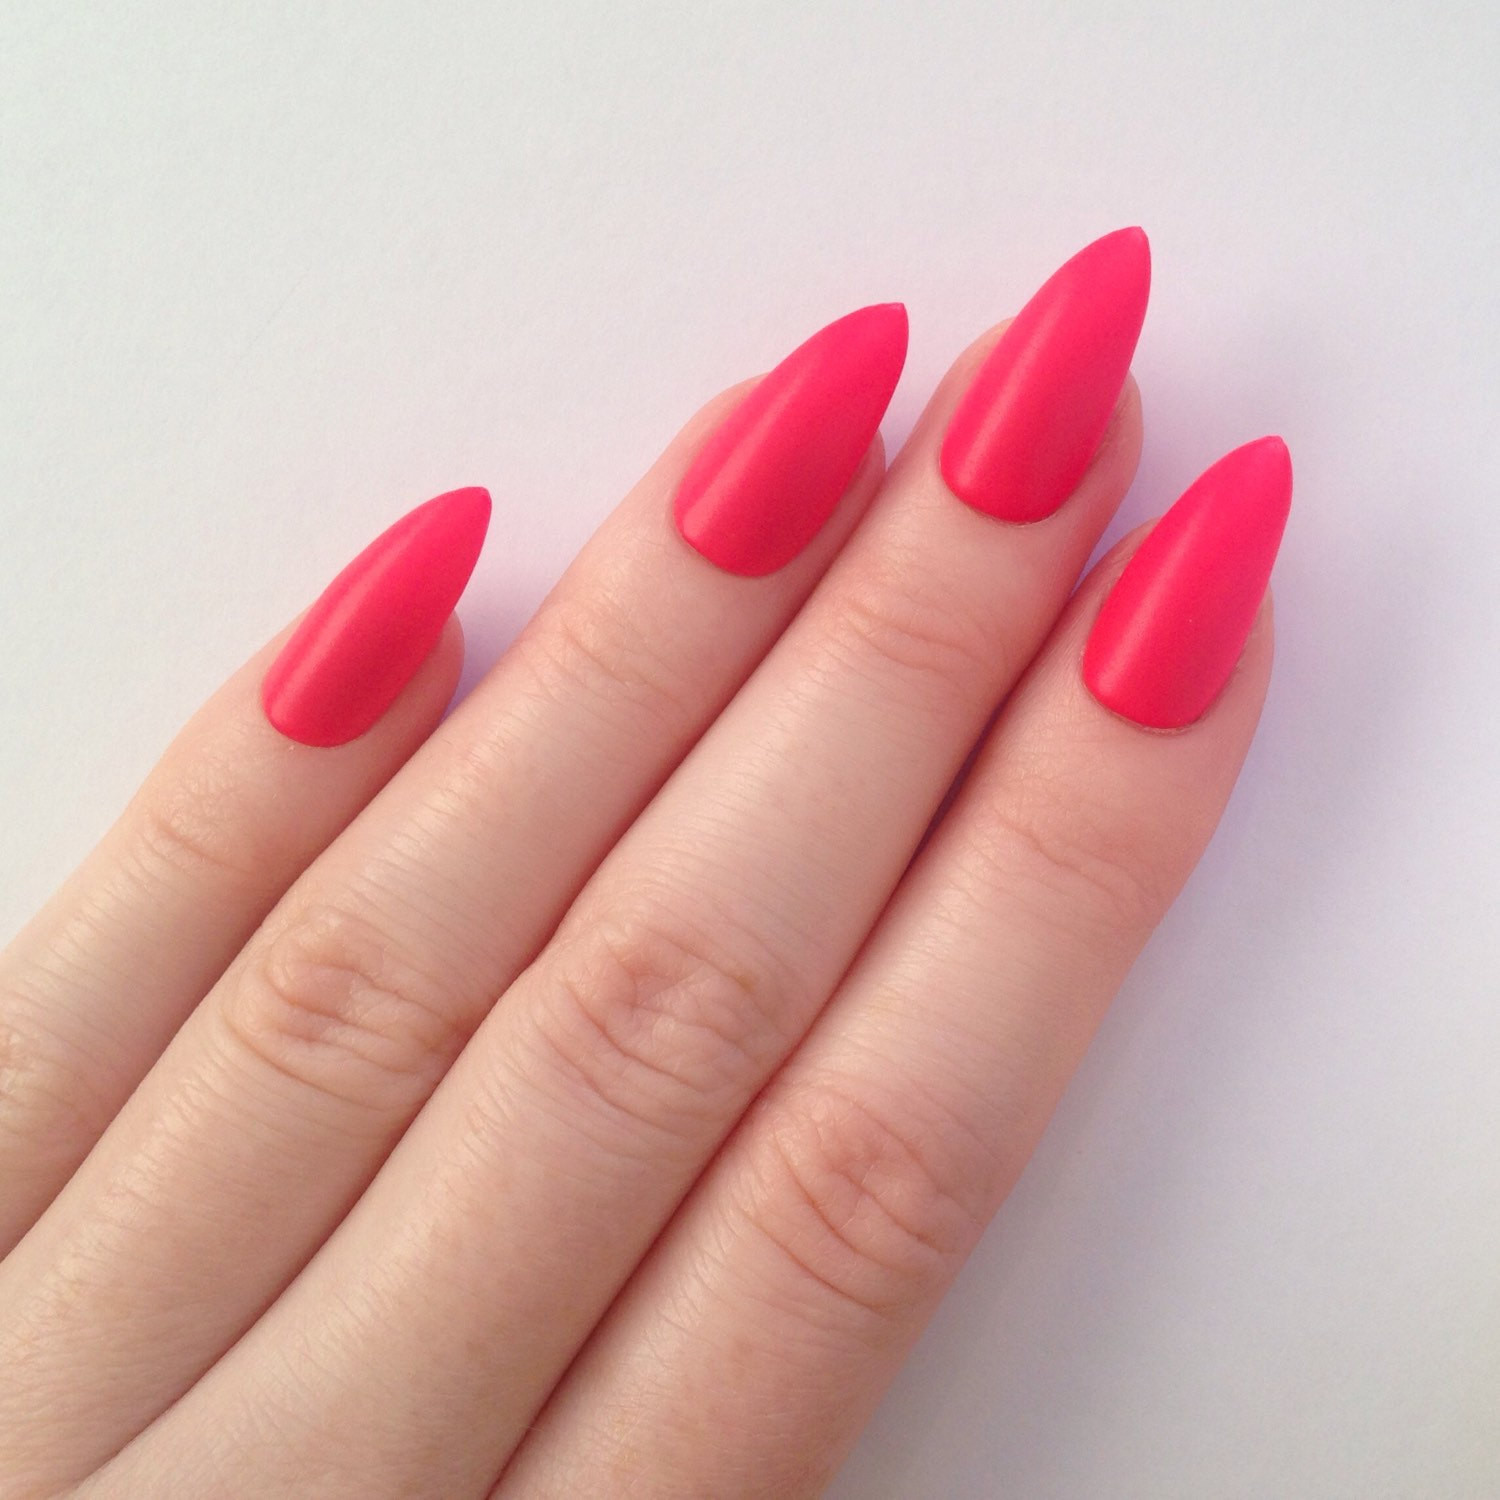 Neon Pink Nail Designs
 Matte neon pink stiletto nails Nail designs by